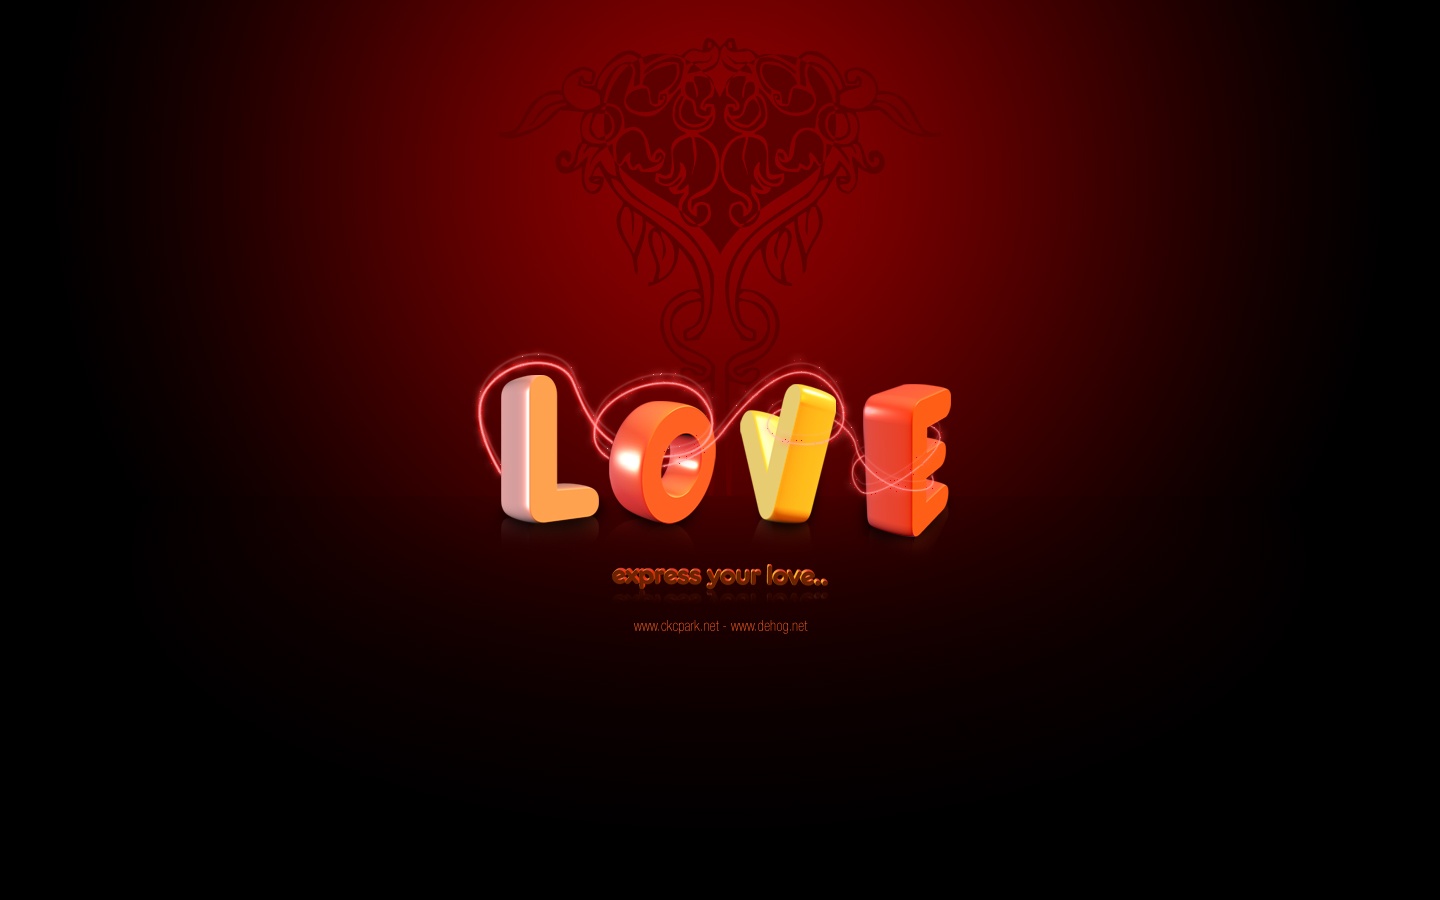 Love Desktop Background Wallpaper In Jpg Format For